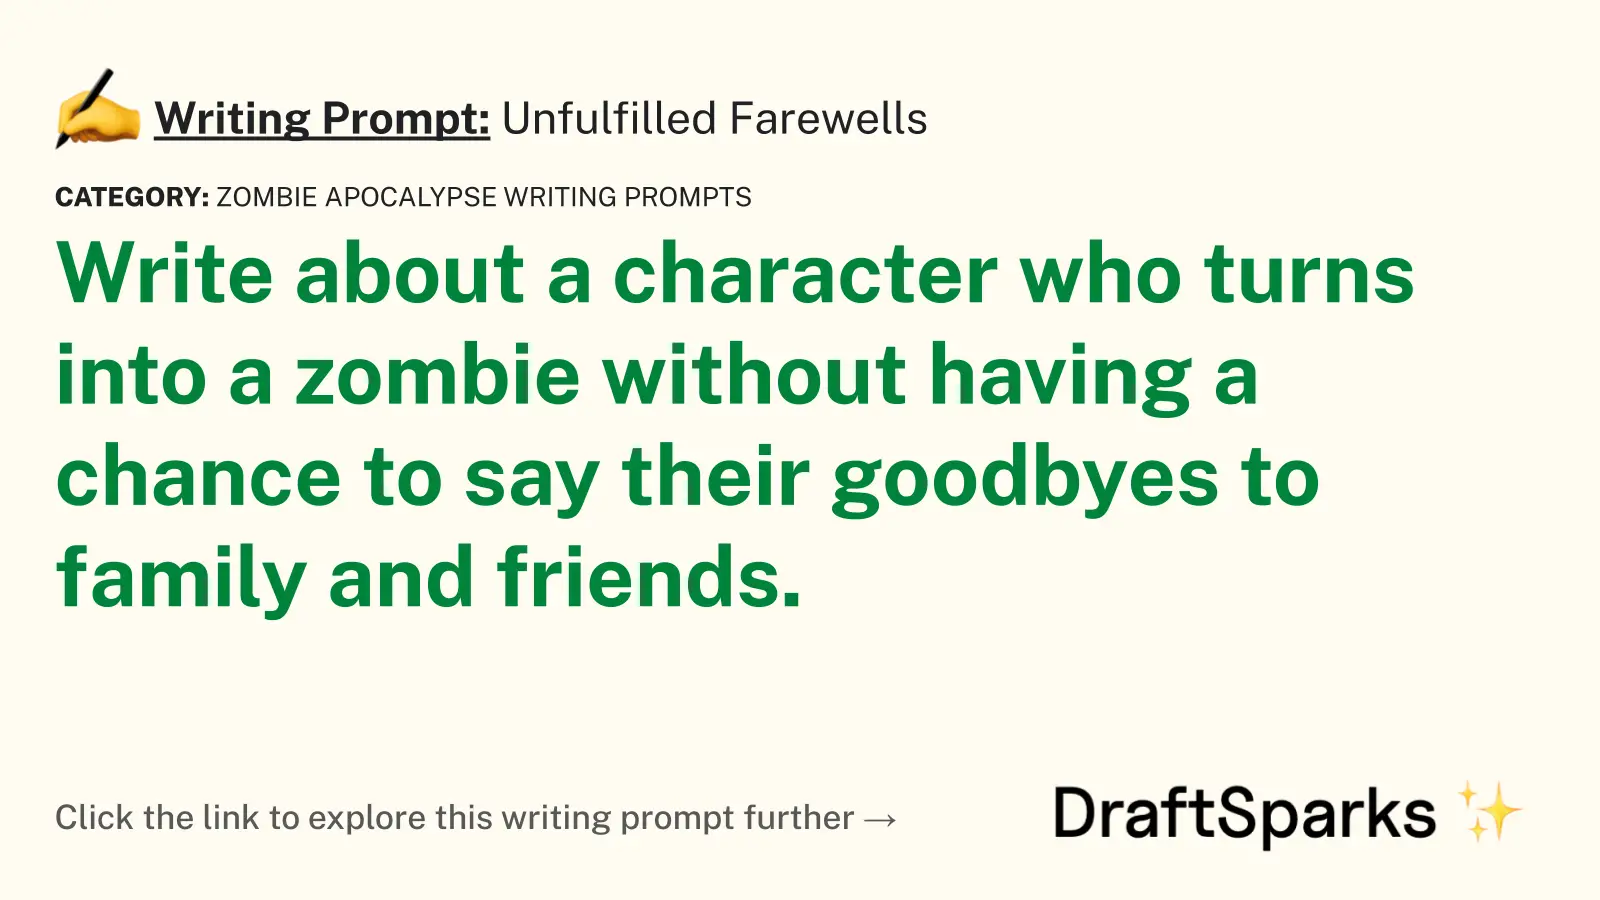 Unfulfilled Farewells